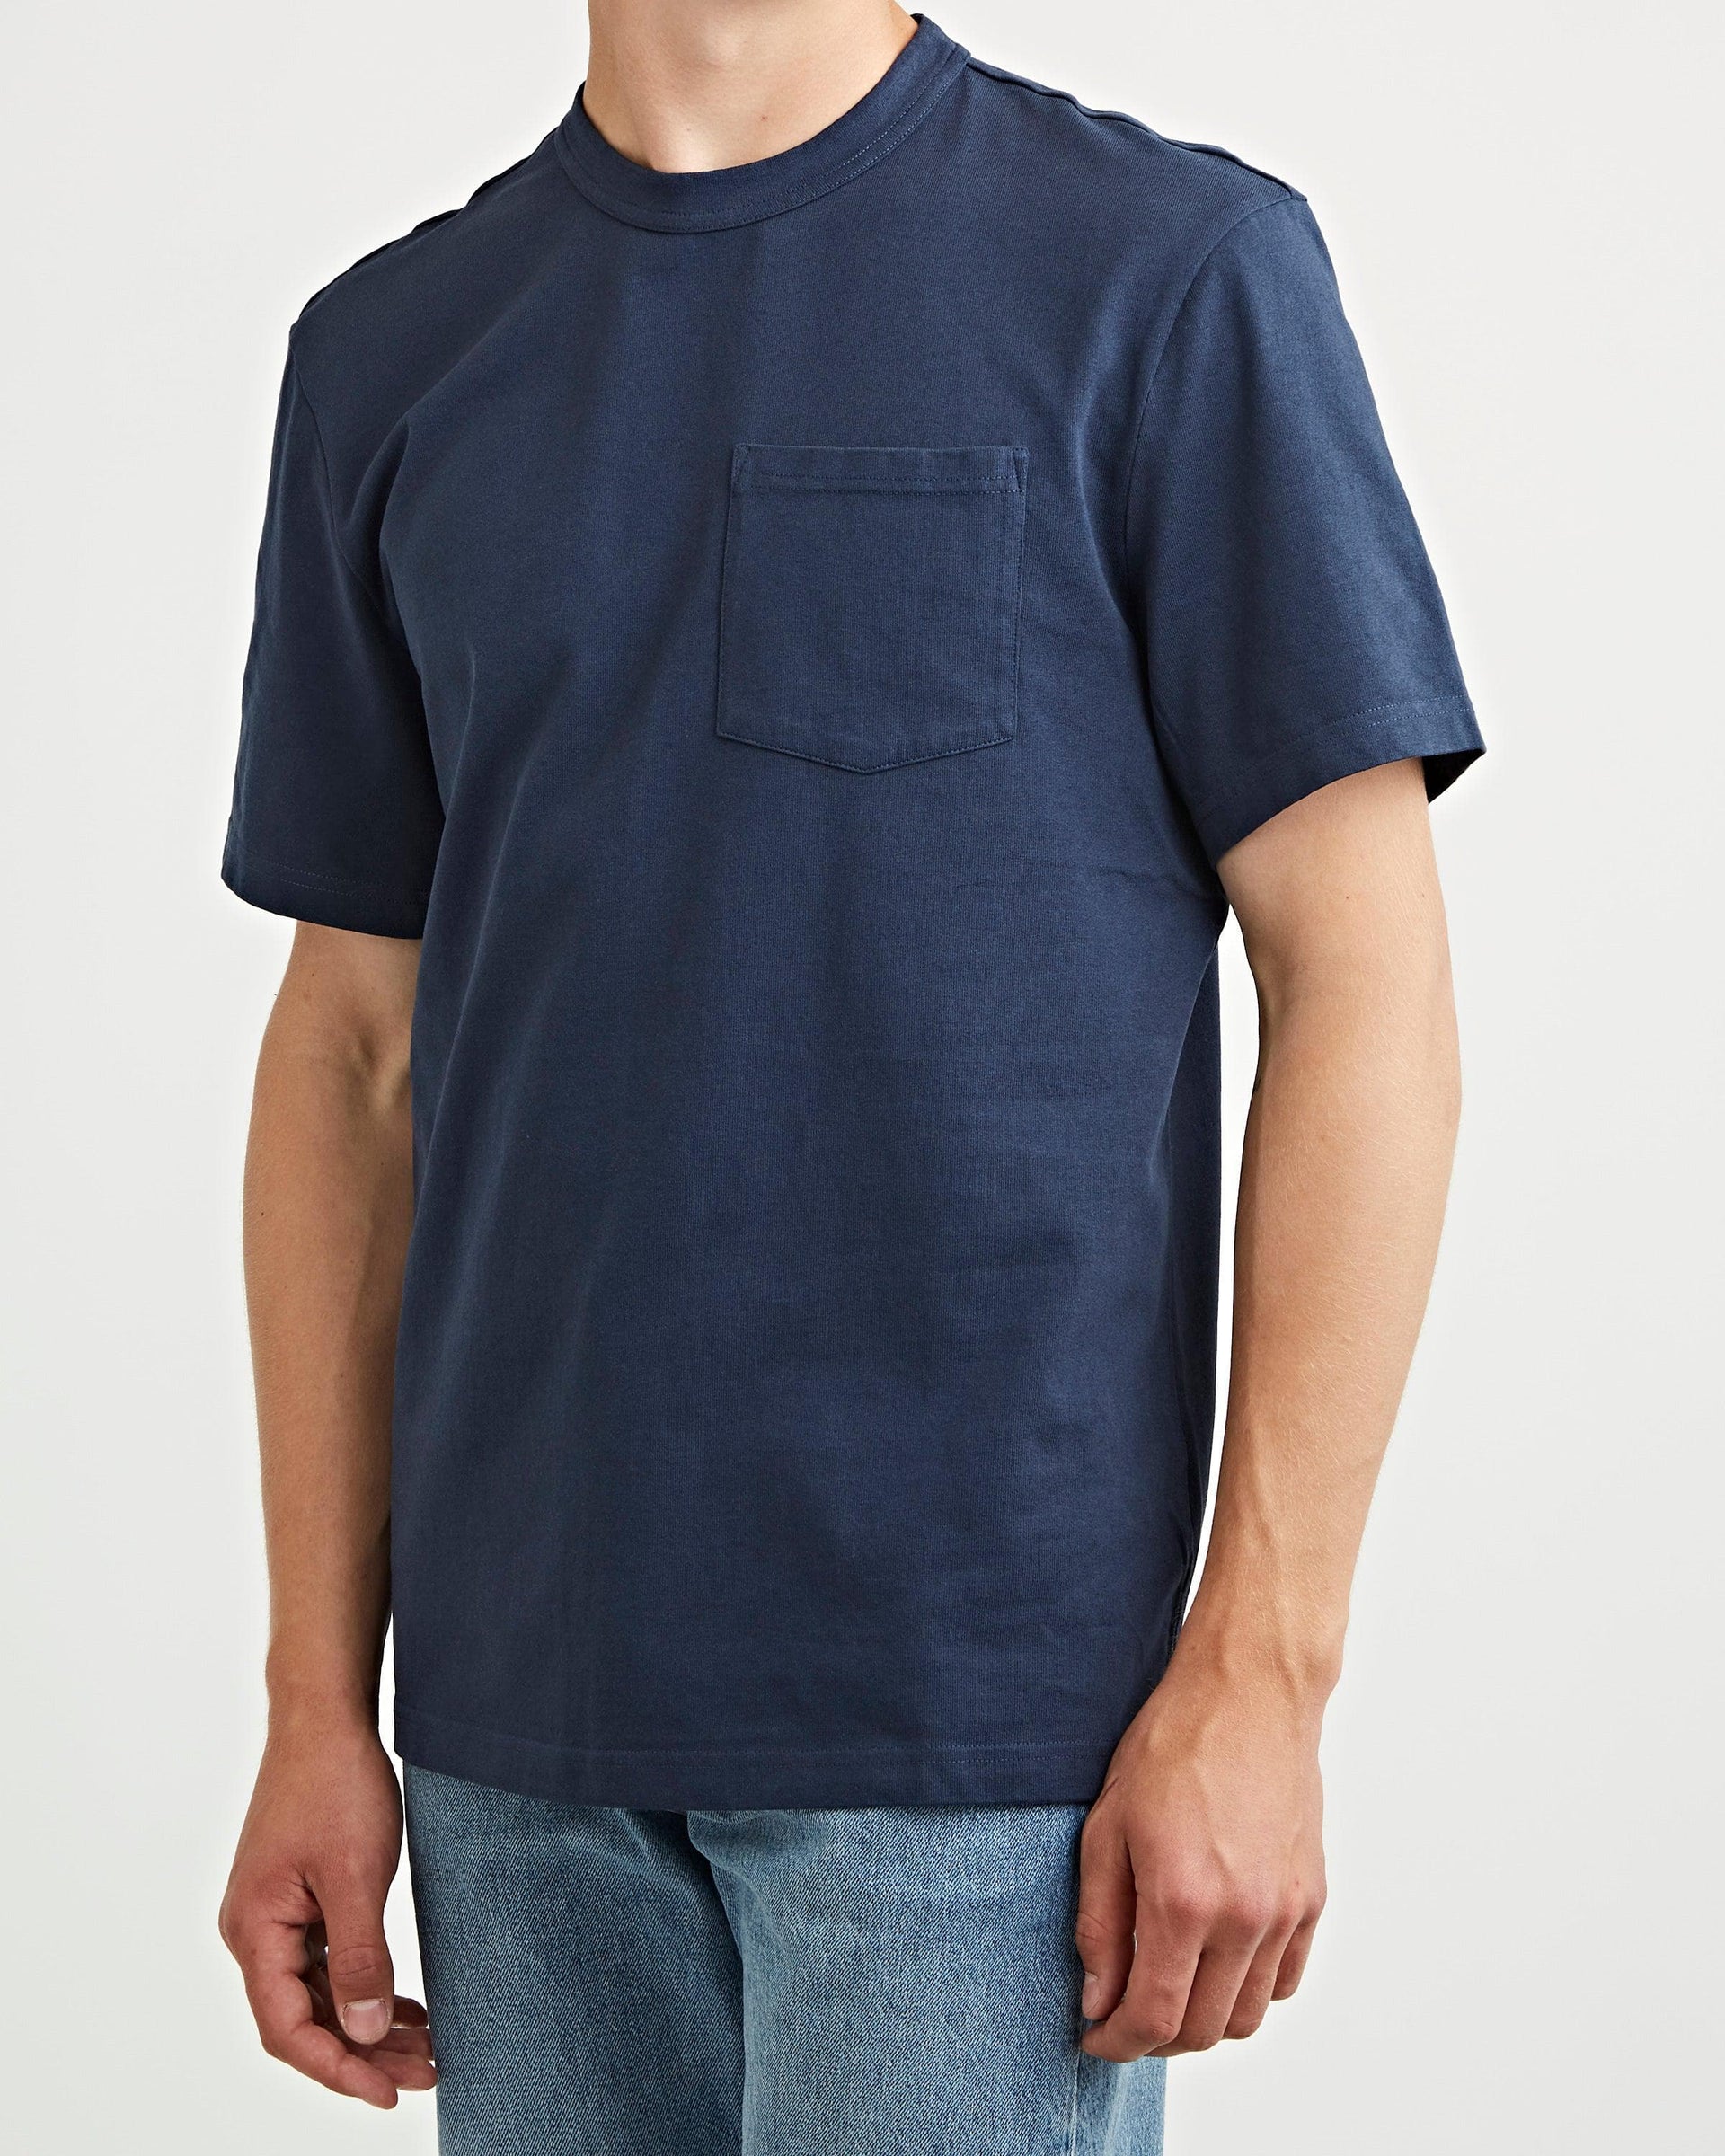 Tenue. John Pocket Tee Outer Space T-shirt S/S Men